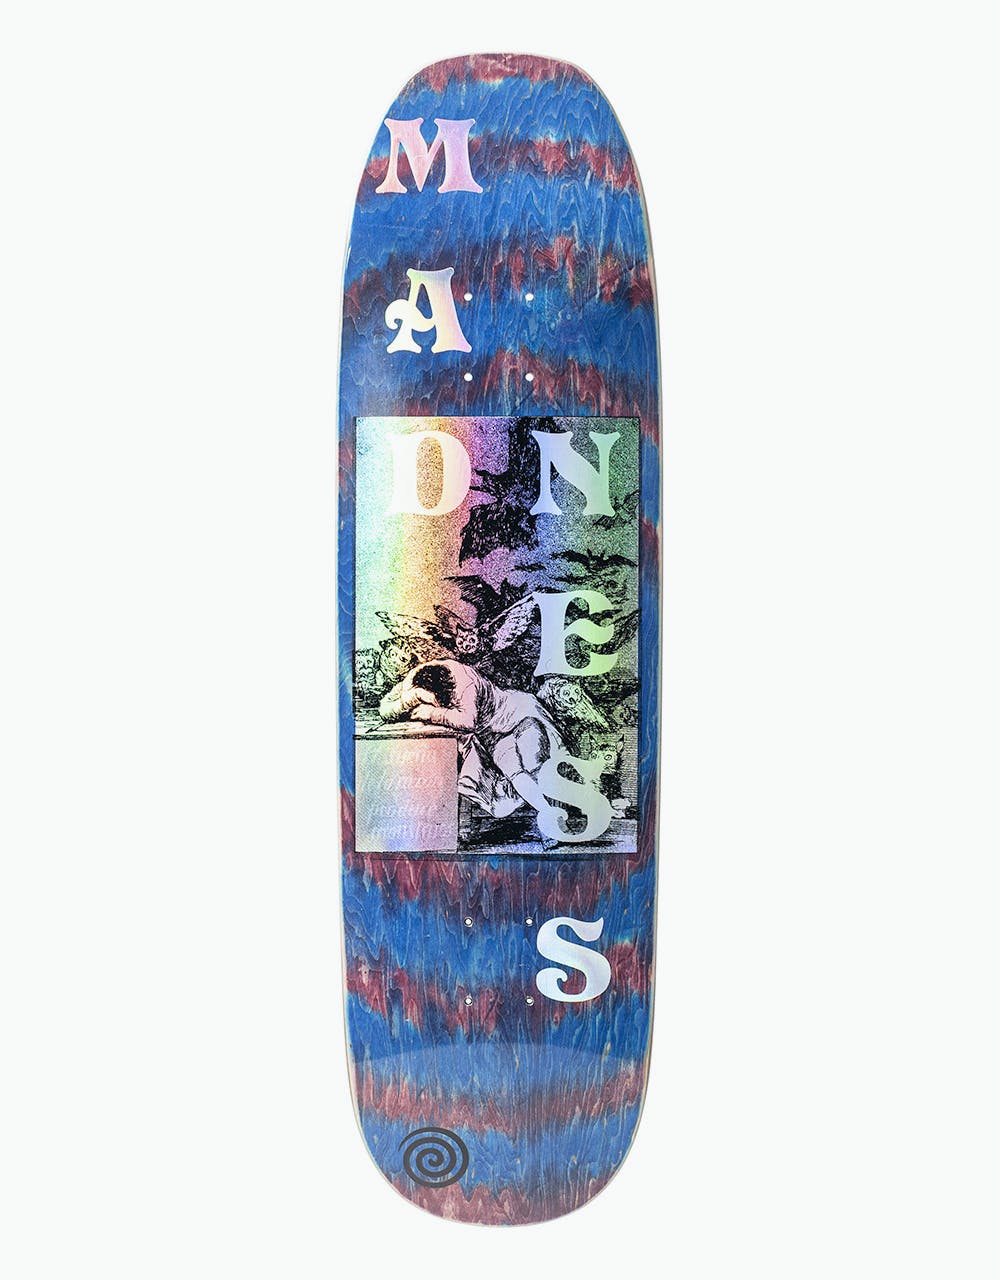 Madness Dreams R7 Skateboard Deck - 8.75"